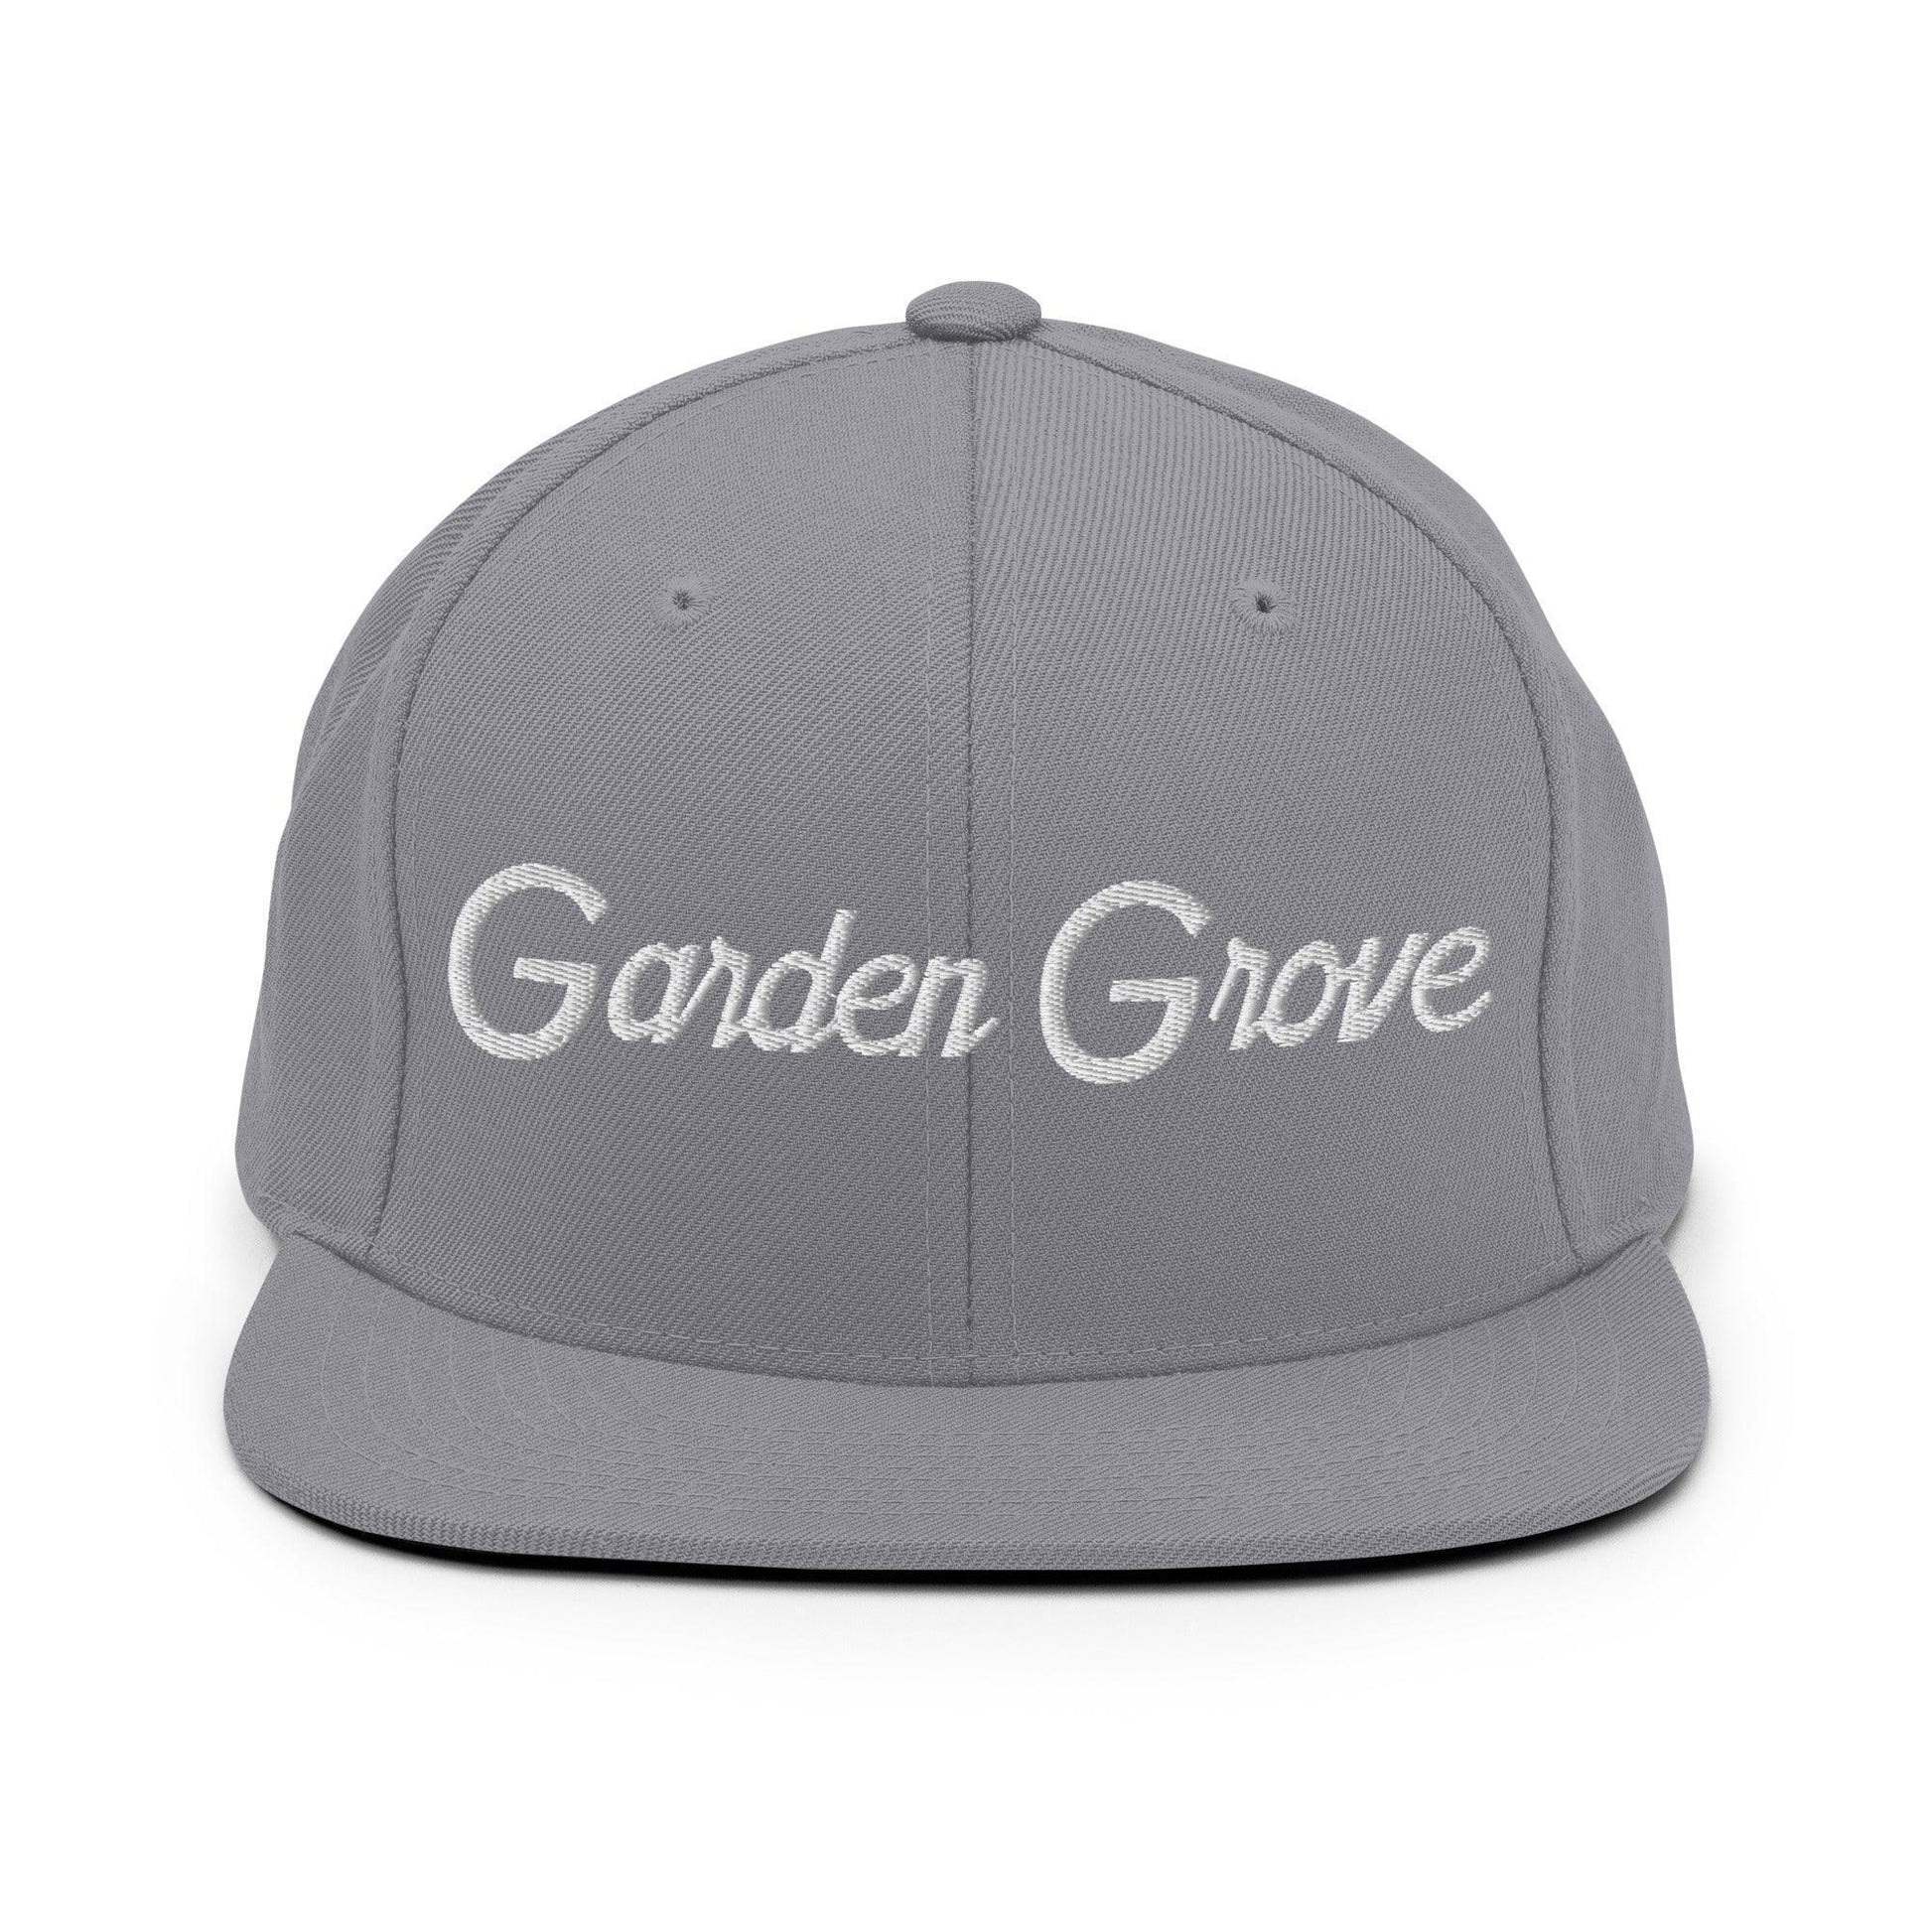 Garden Grove Script Snapback Hat Silver